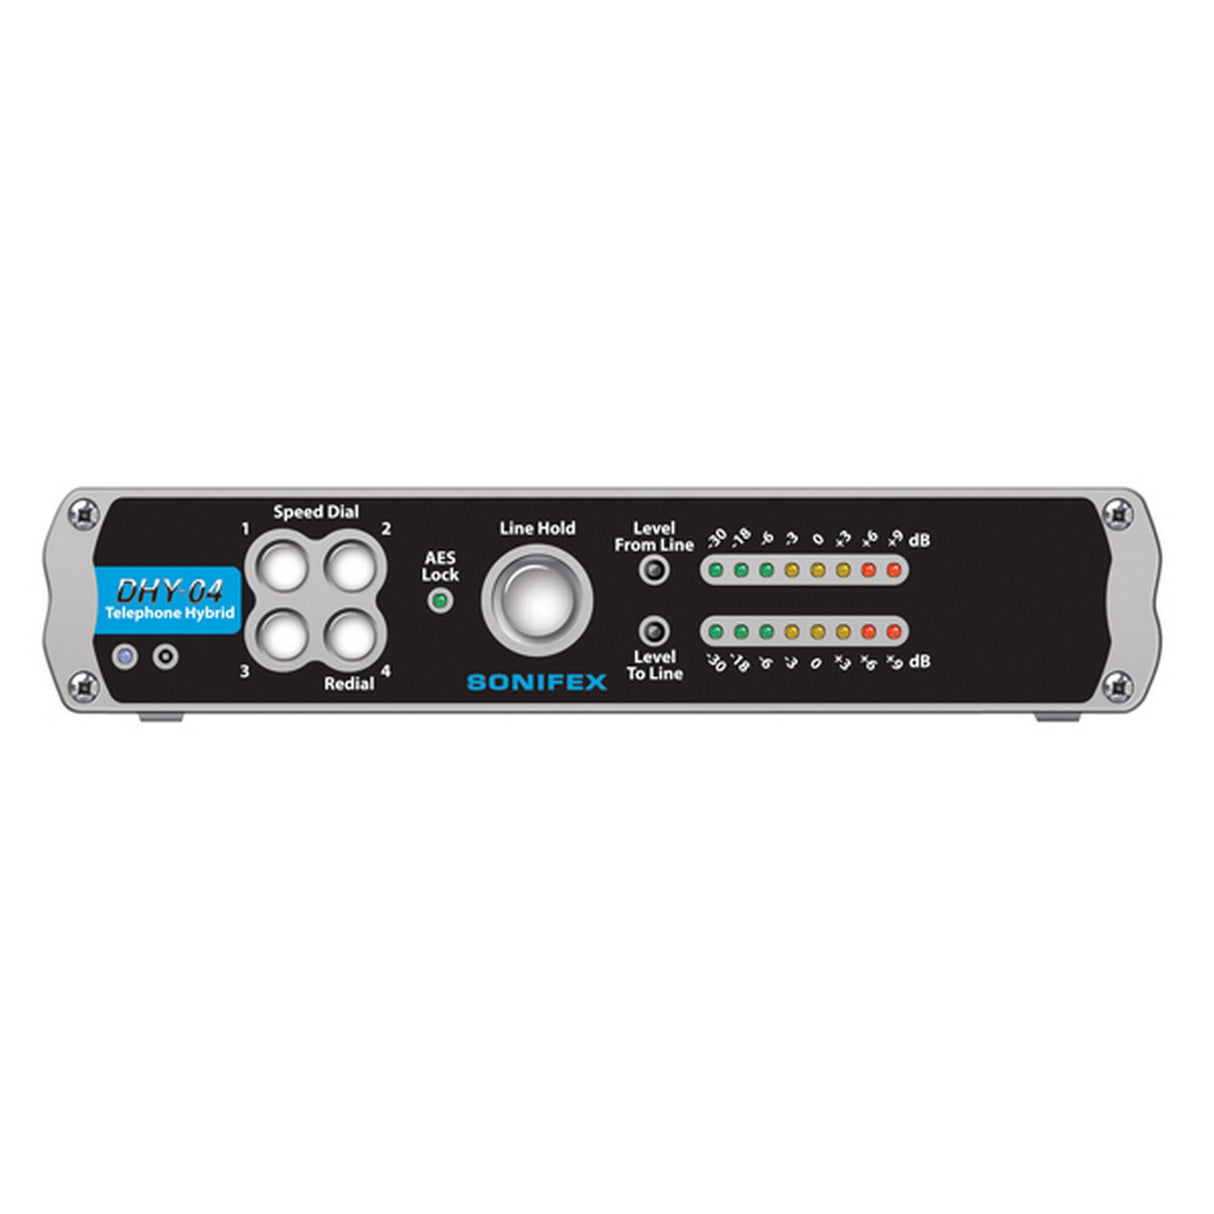 Sonifex DHY-04 Digital TBU,AES/EBU, Analogue, Ethernet, Free Standing